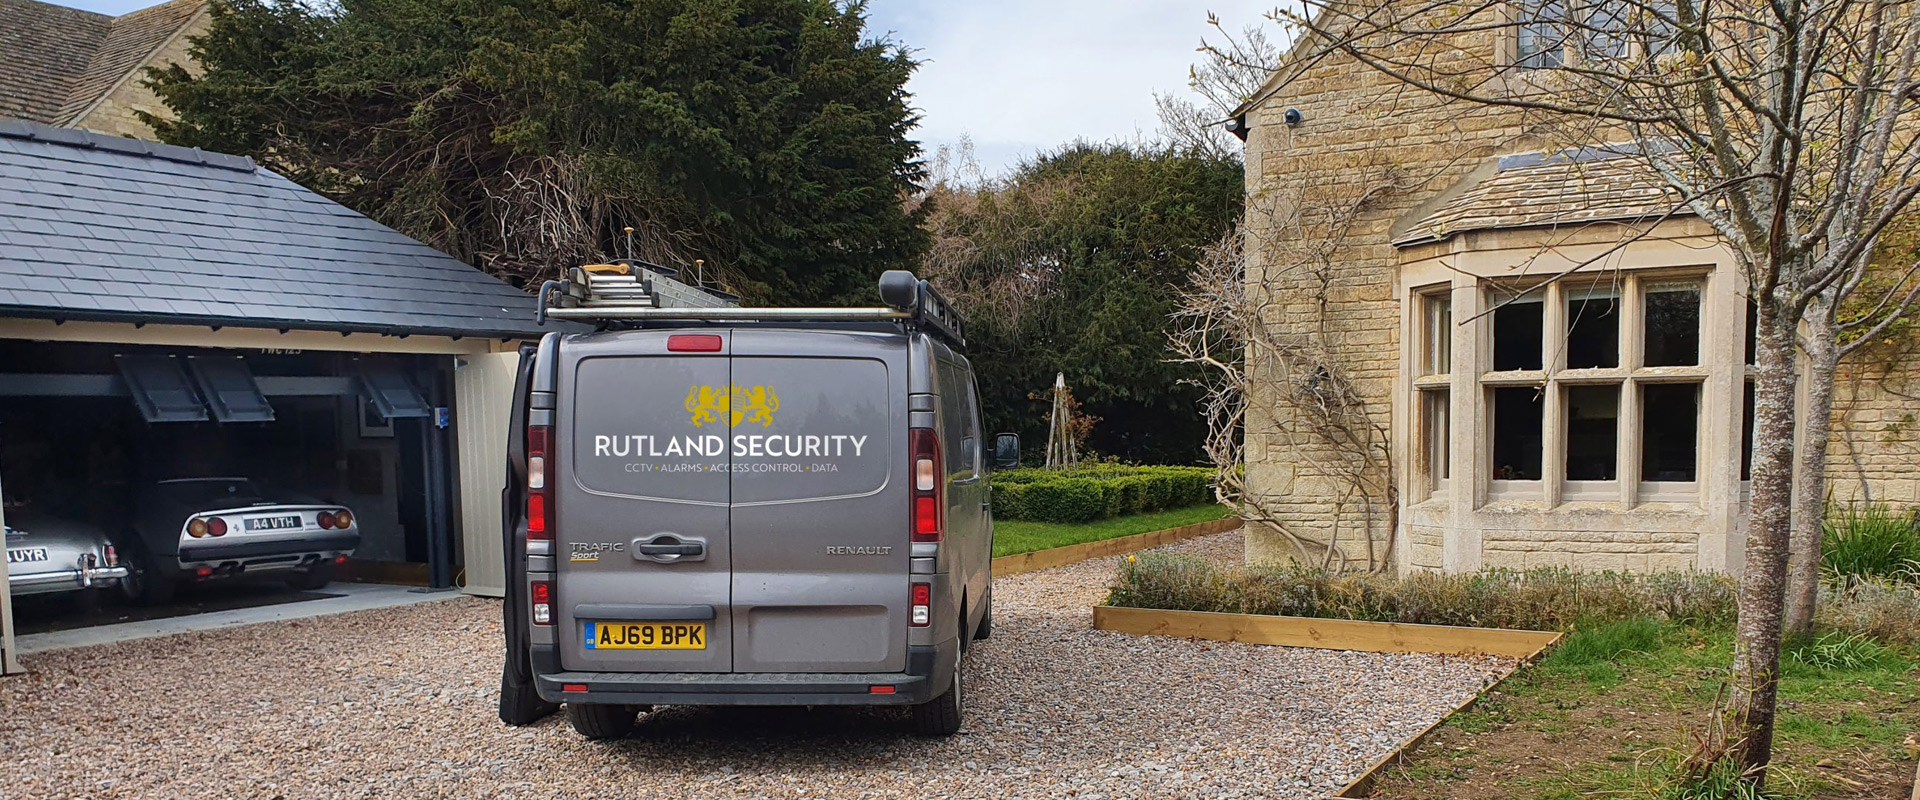 Rutland Security | Premium Home & Commerical Security